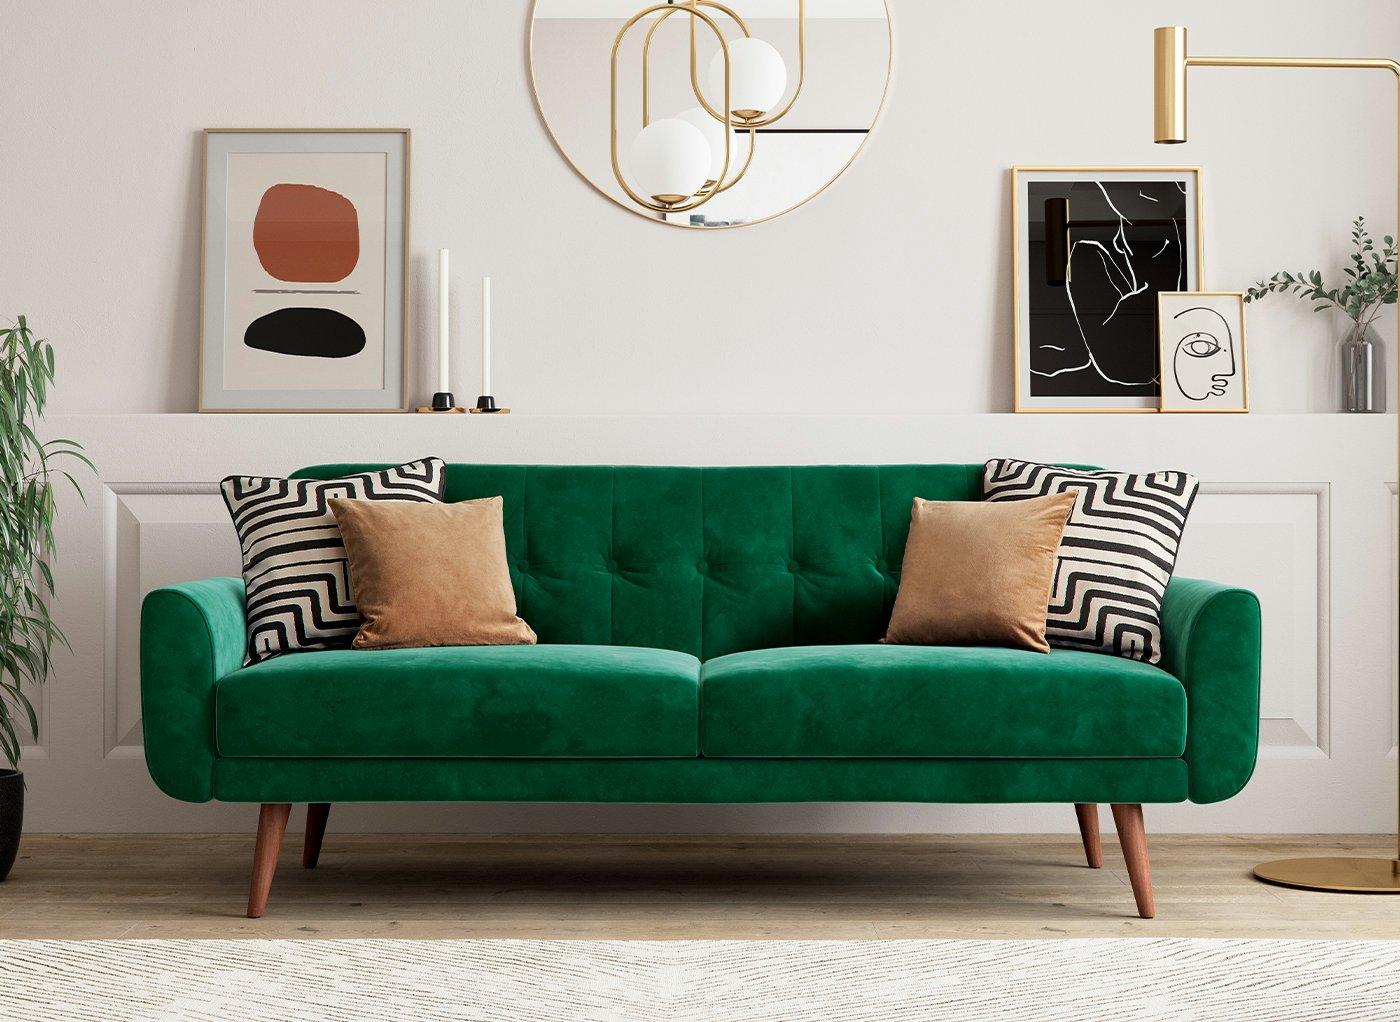 Gallway sofa bed in green velvet